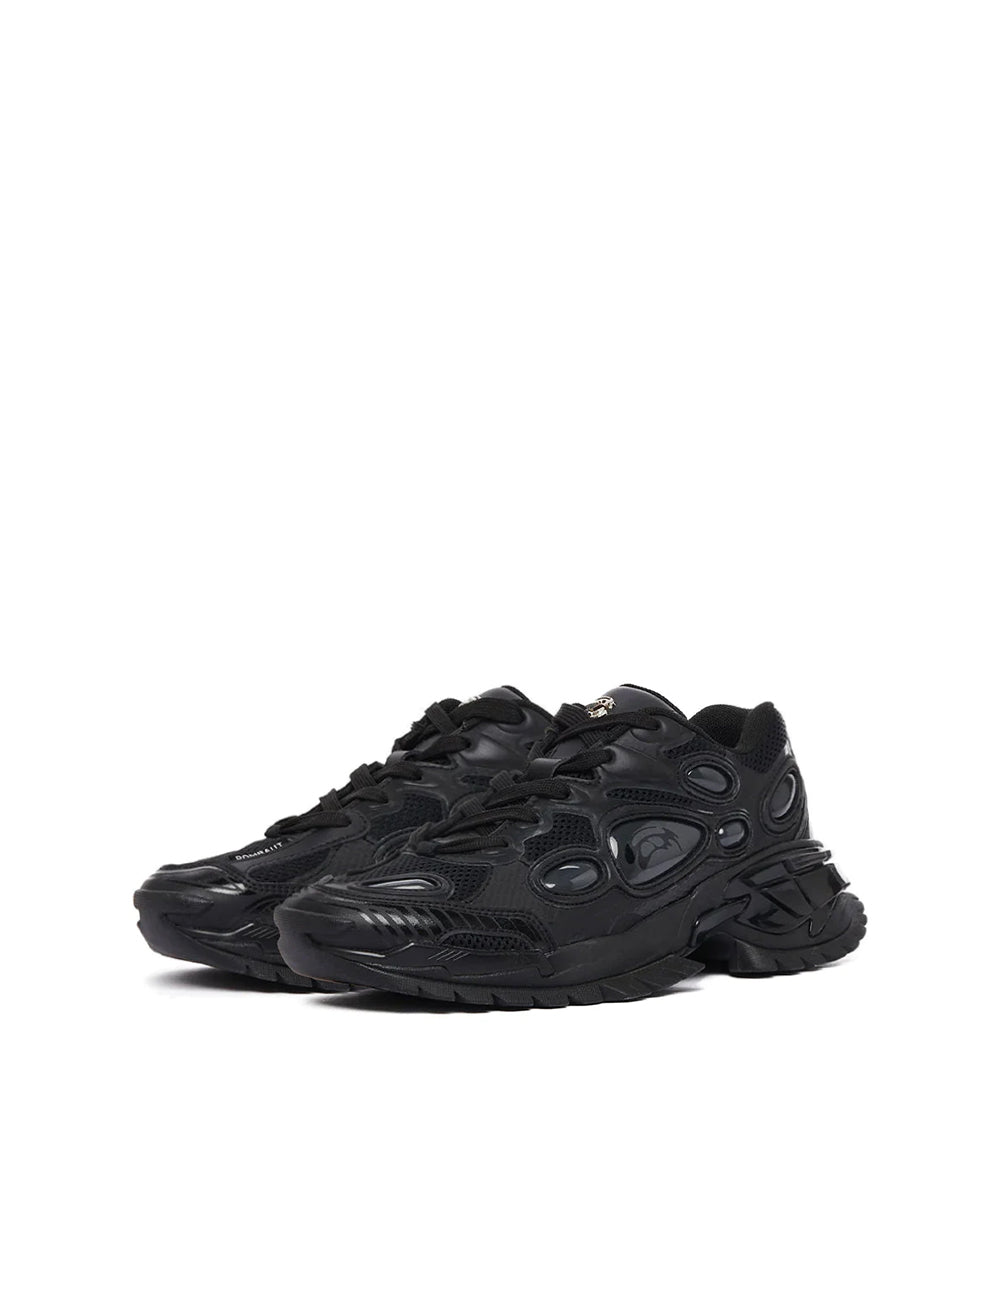 Rombaut Nucleo Volcanic Black Sneakers